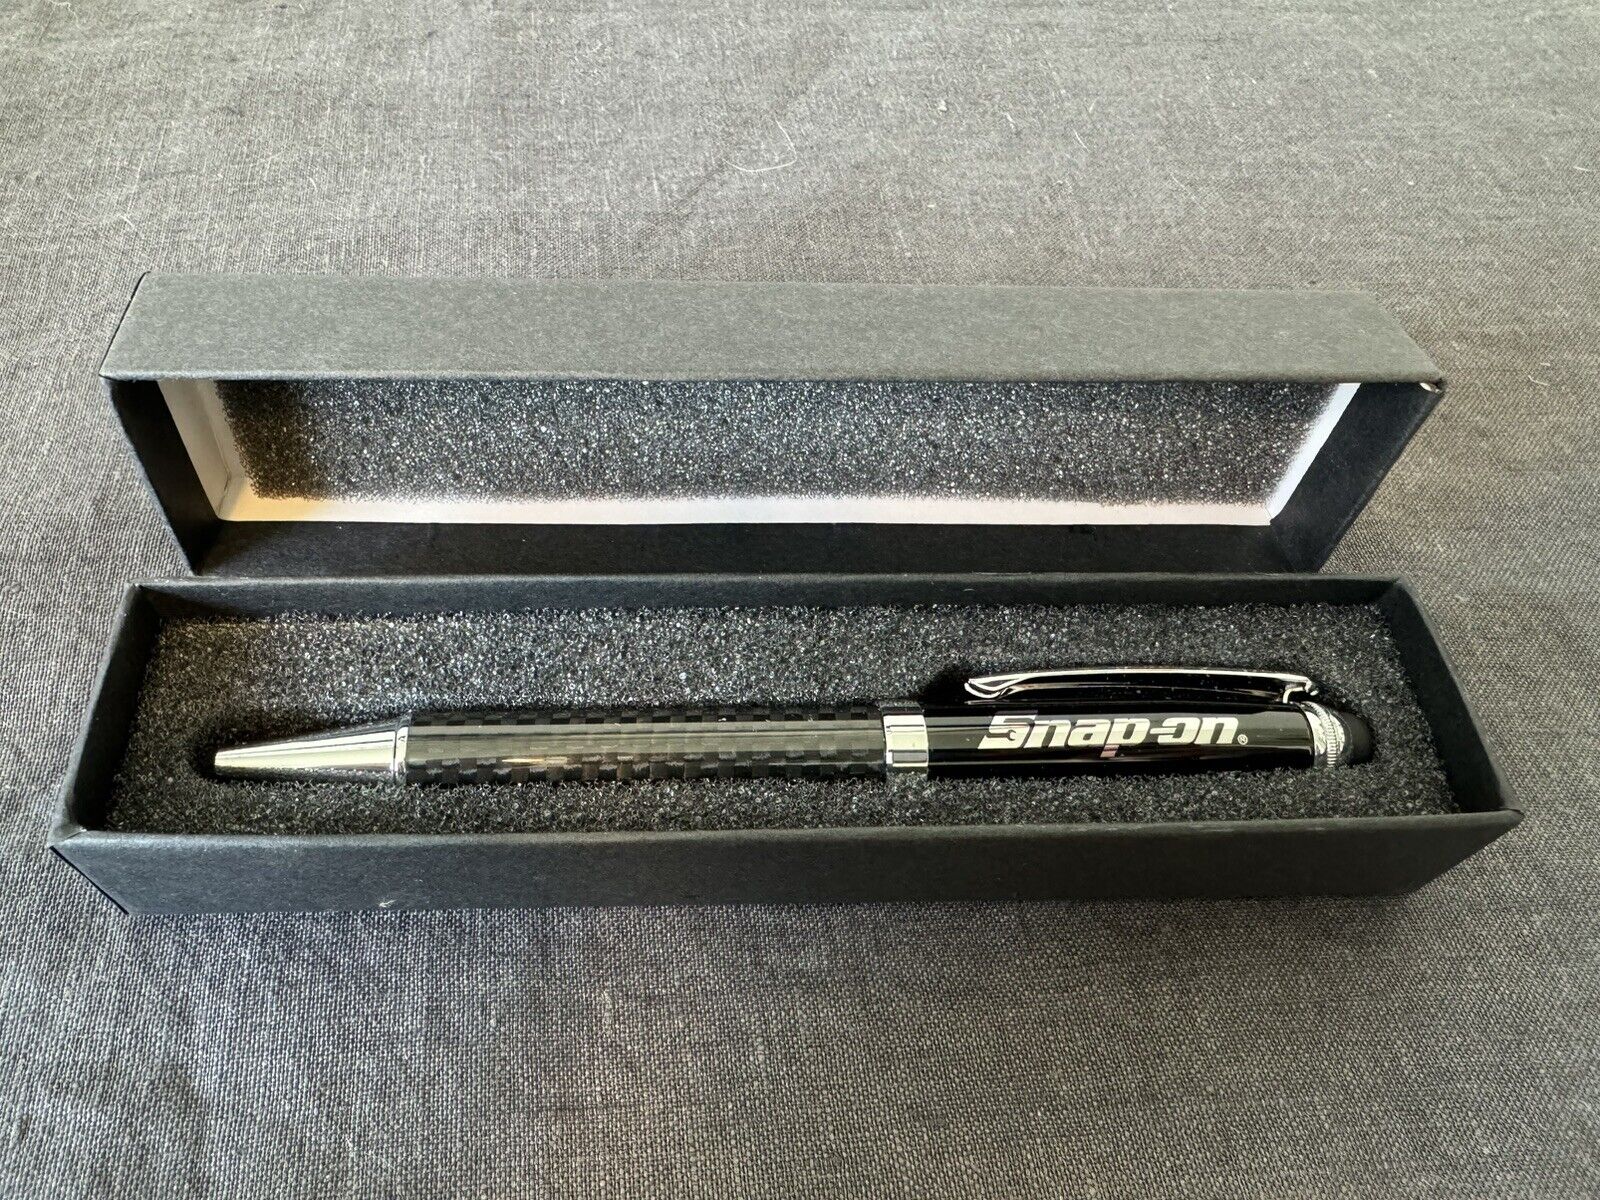 Snap-on Tools NEW Carbon Fiber Pocket Pen - Black Ink, Stylus on end for Phone